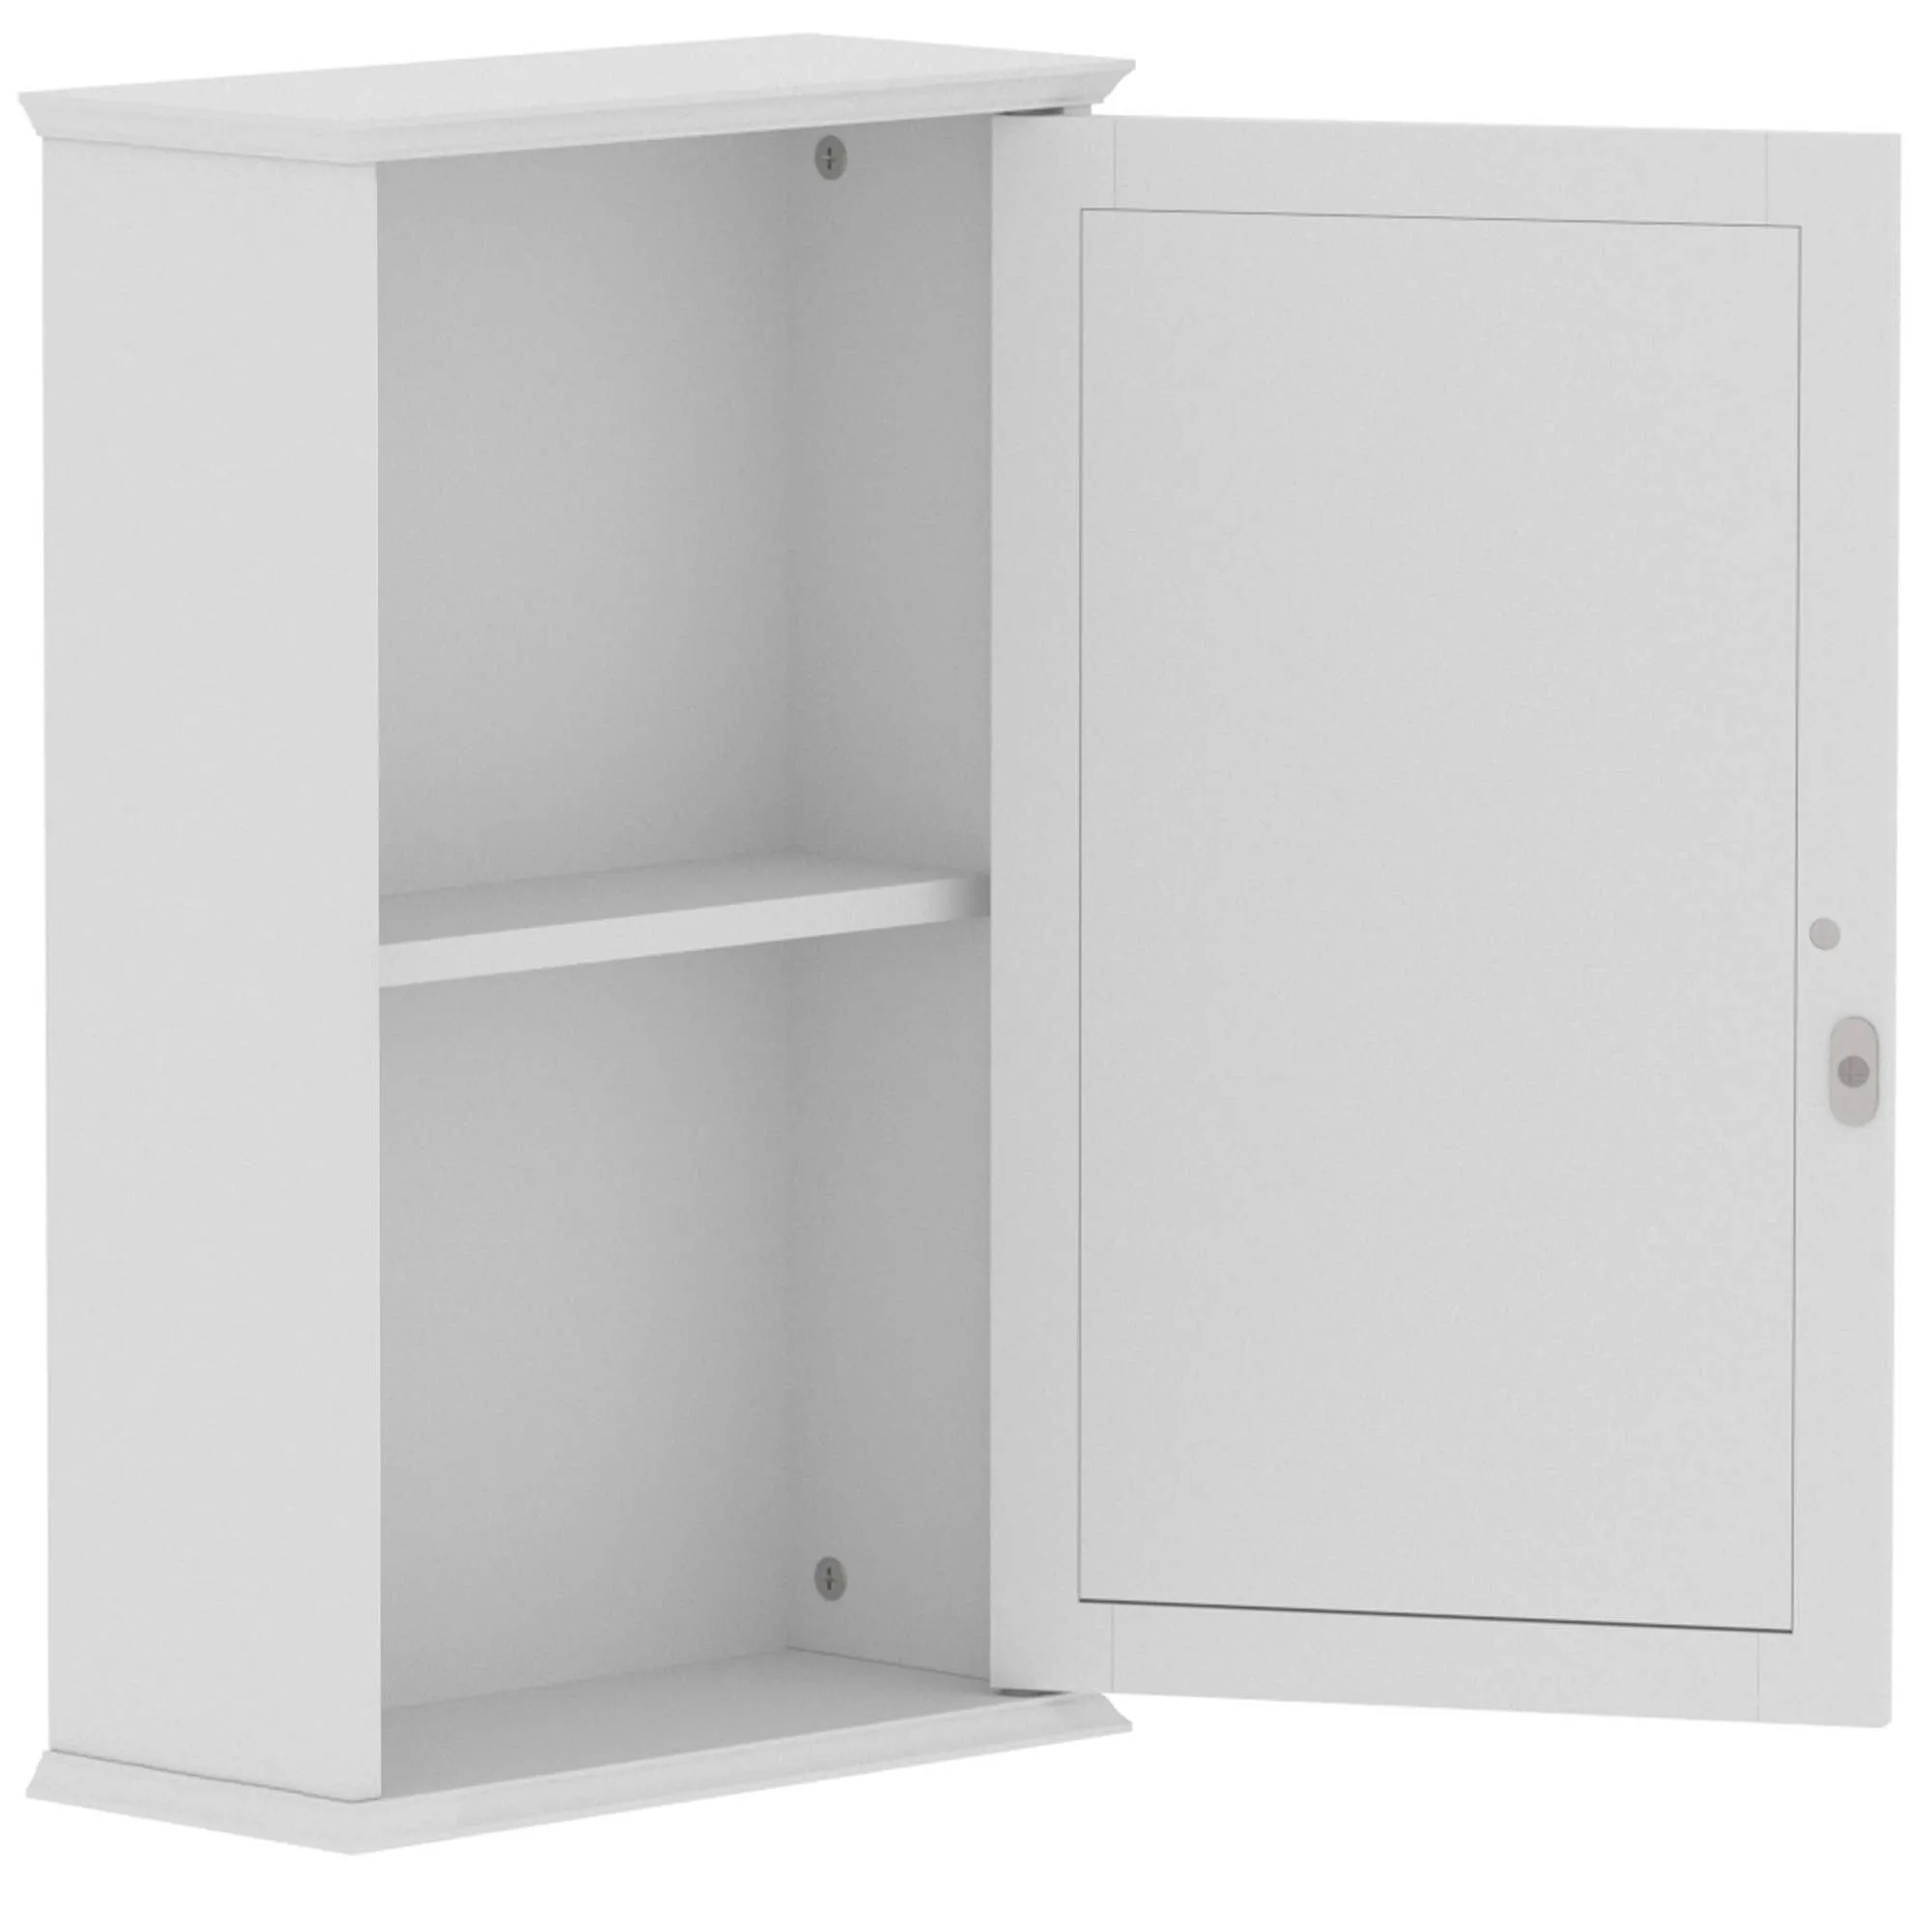 Lassic Rebecca Jones Matt White Single Mirrored Wall Cabinet (W)340mm (H)530mm